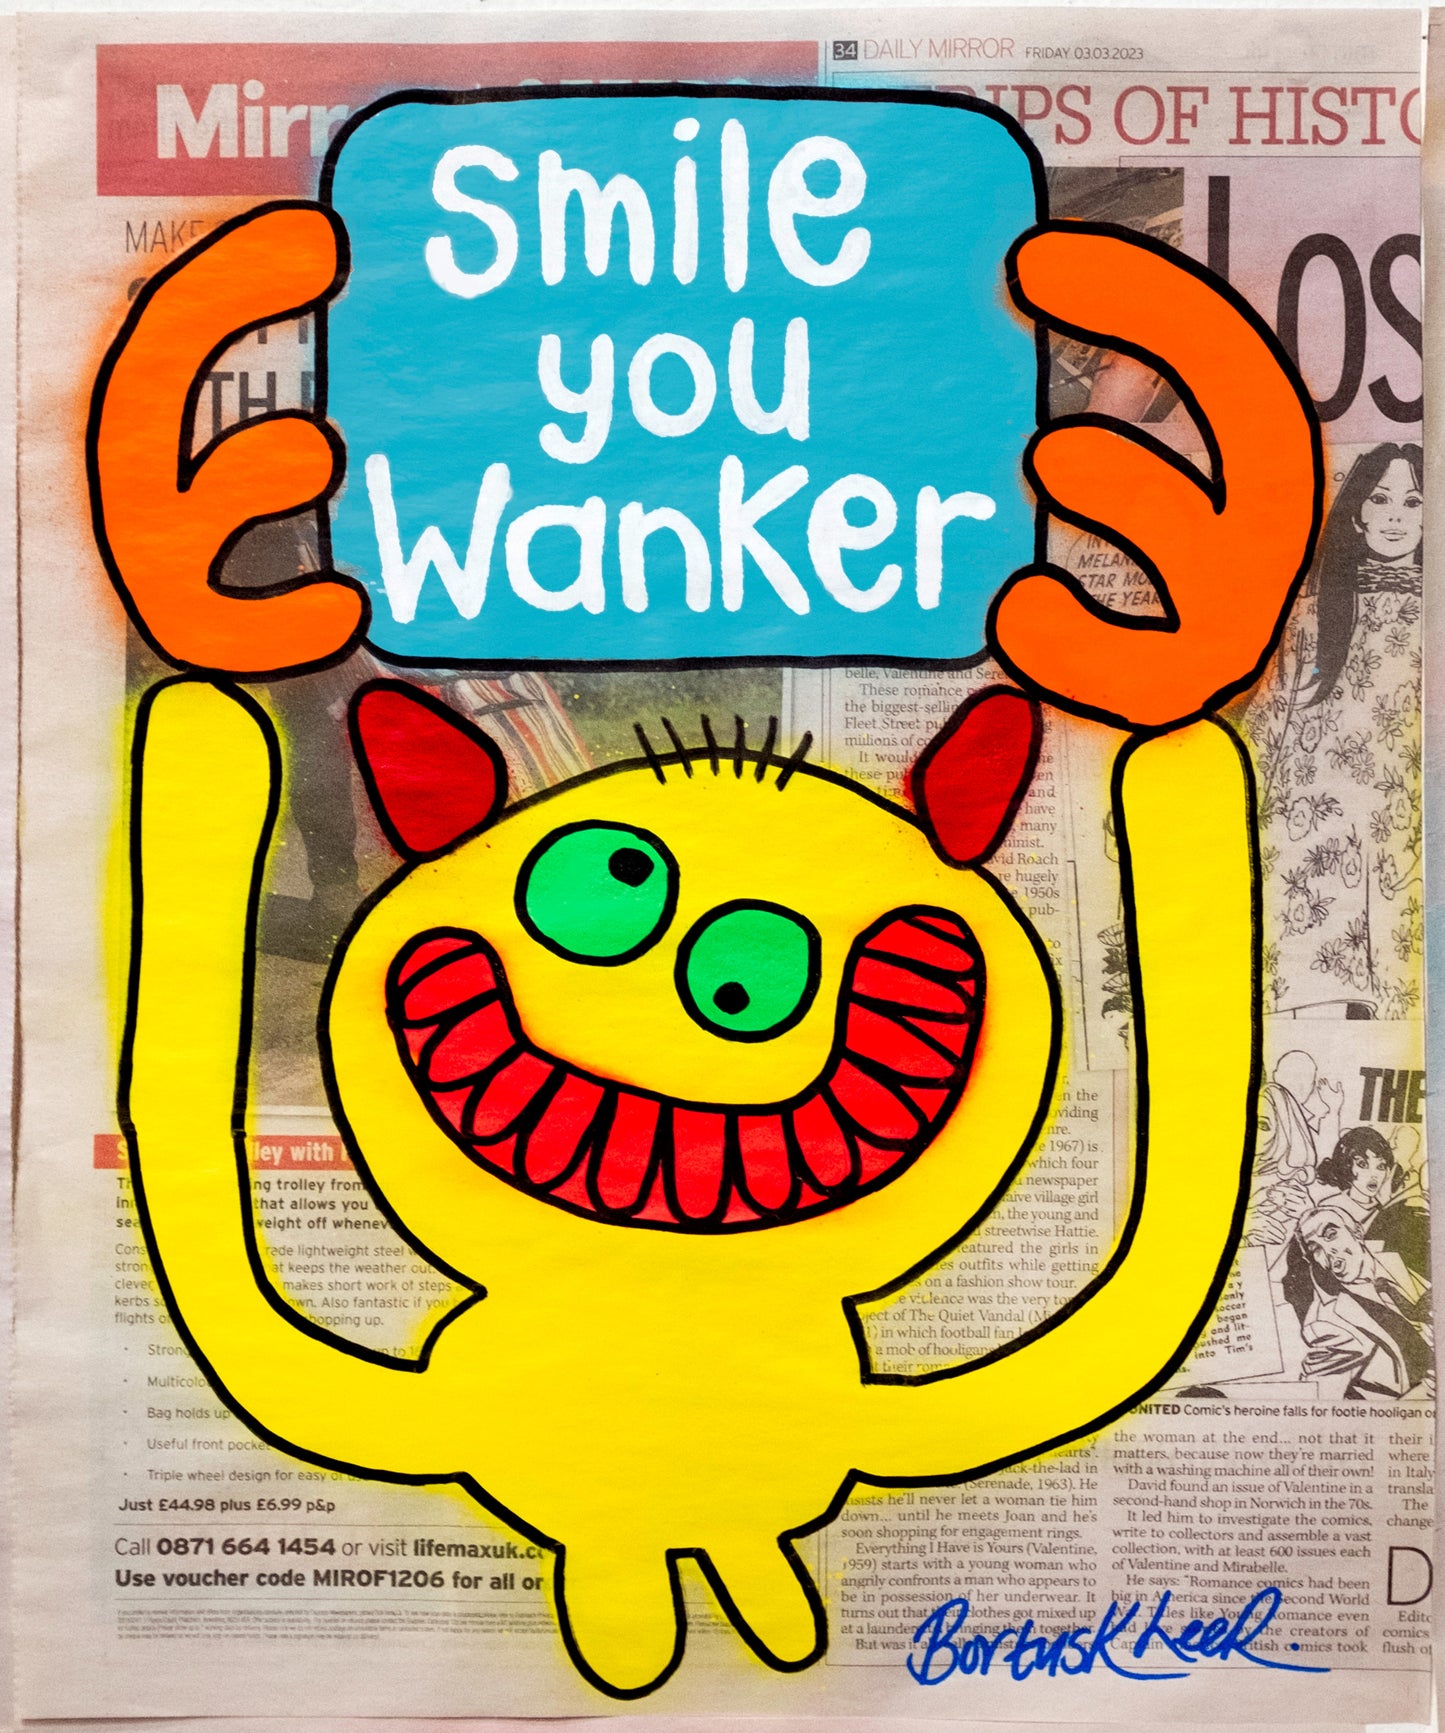 Smile you Wanker by Bortusk Leer